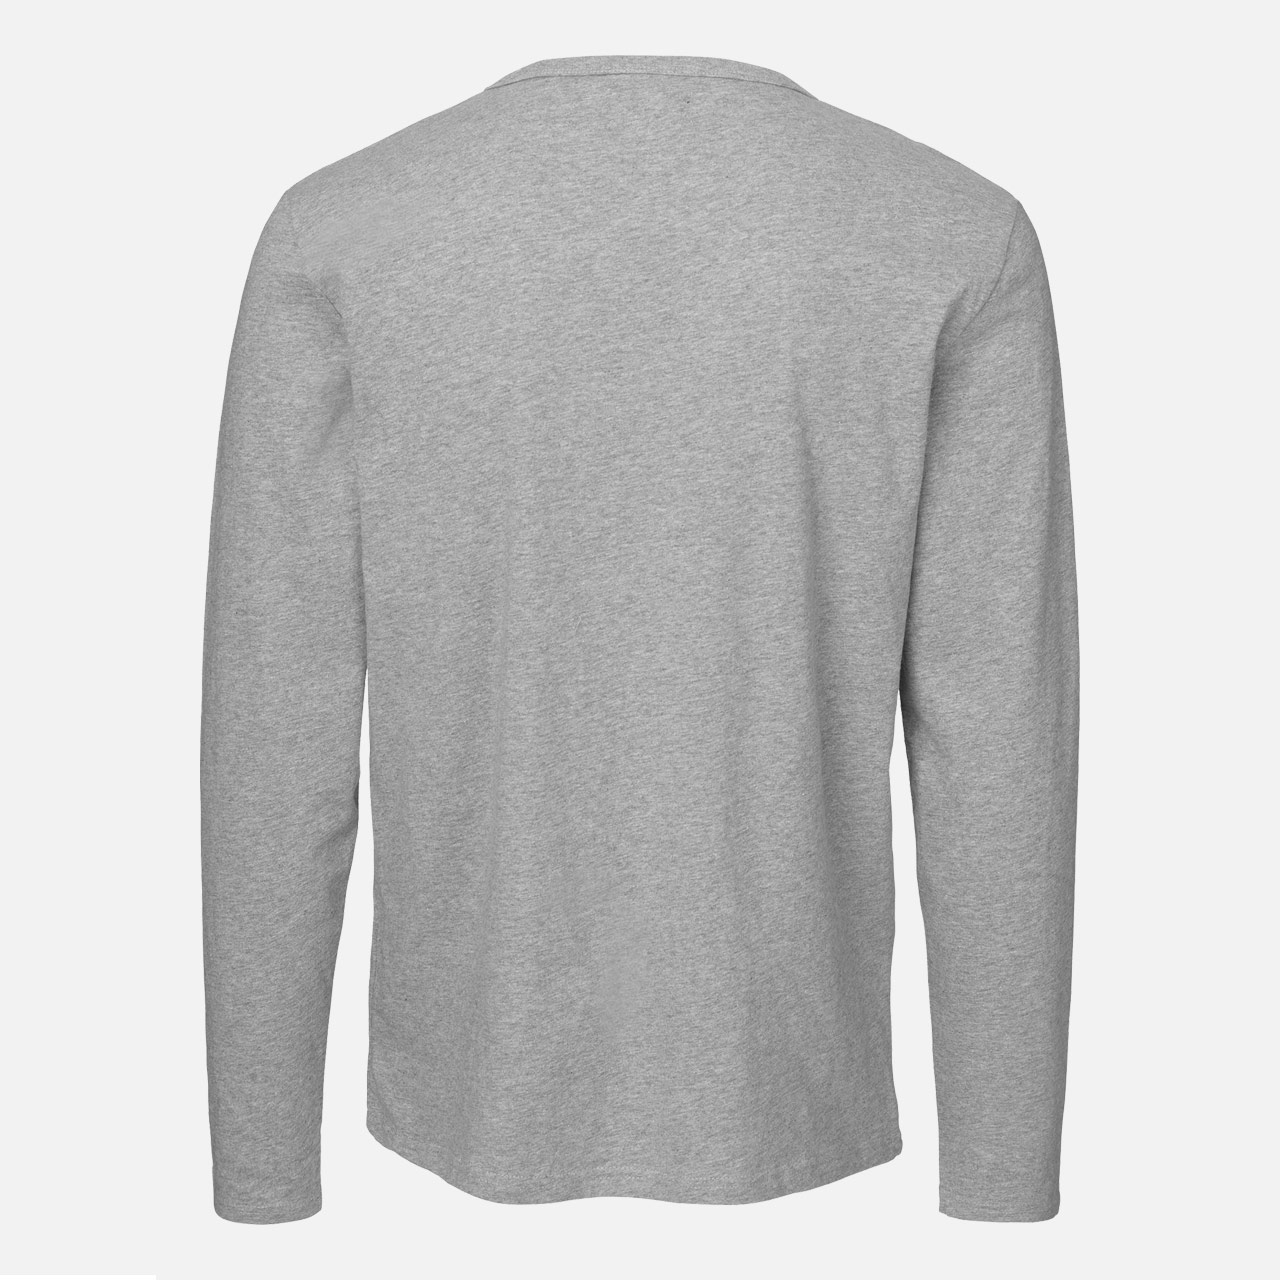 Doppelpack Mens Long Sleeve Shirt - Bio Baumwolle - Weiss / Sports Grey S Weiss / Sports Grey